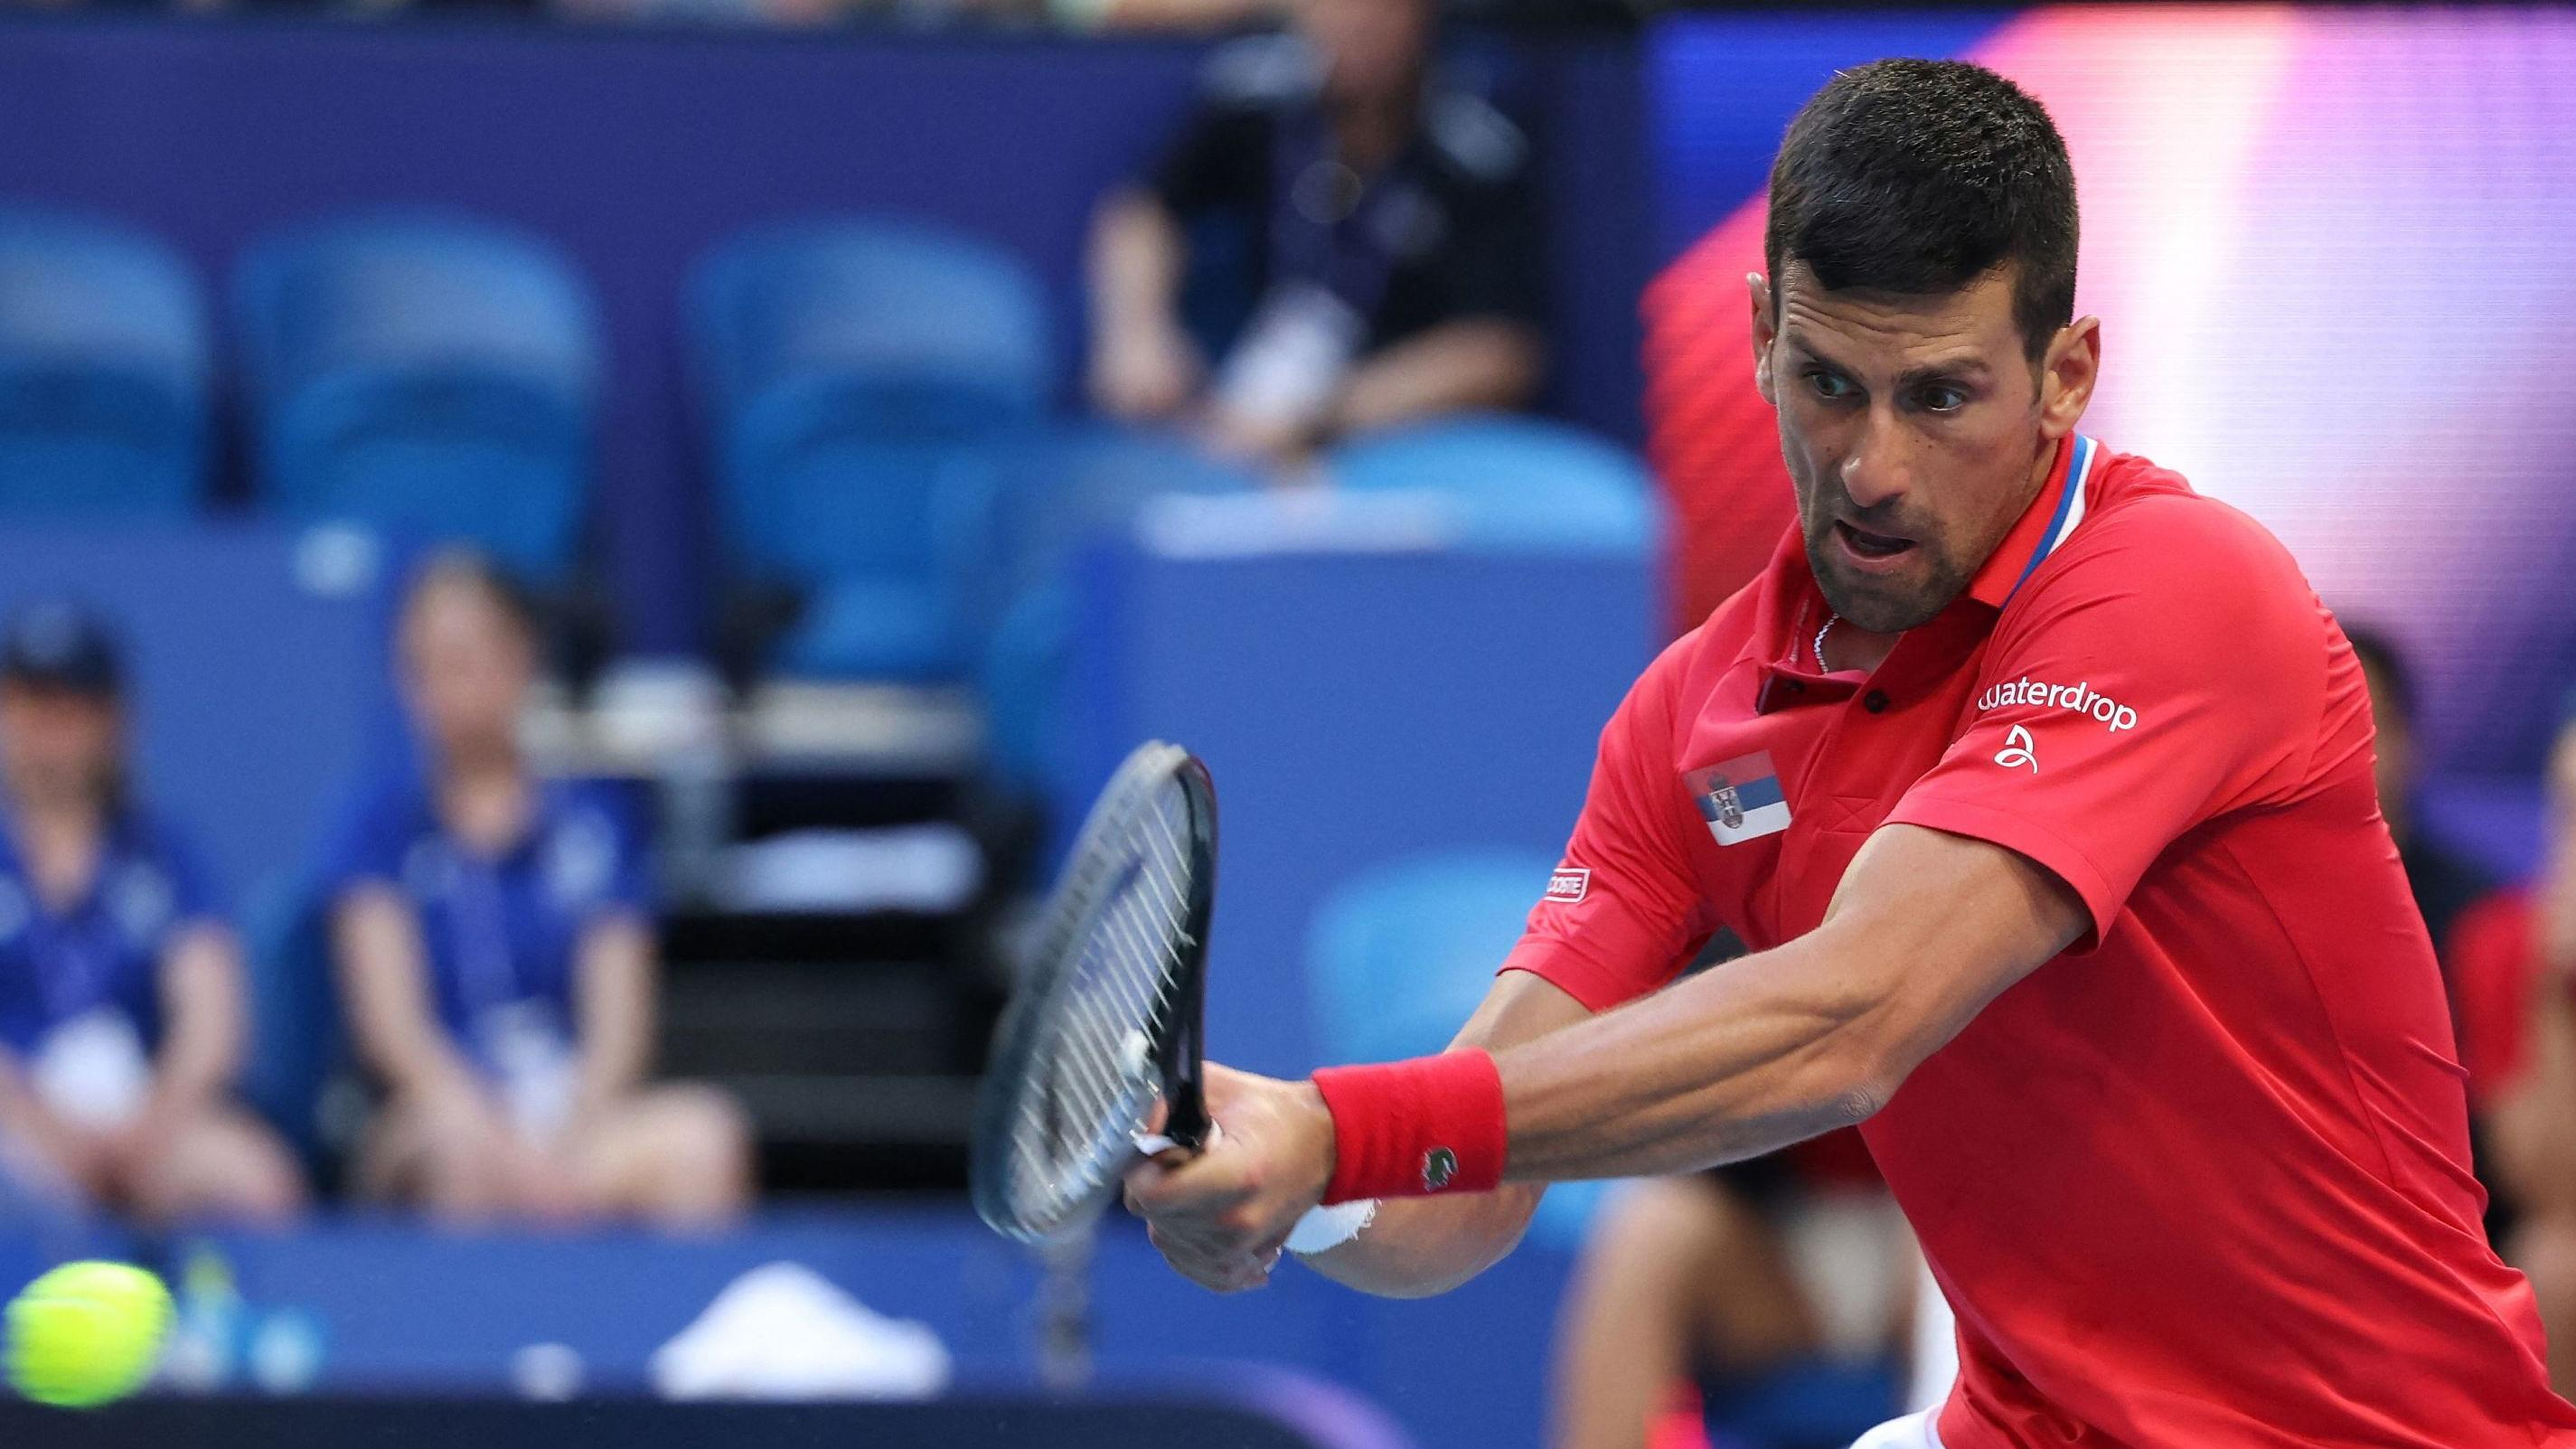 Tennis: Djokovic beaten after 43 consecutive victories in Australia